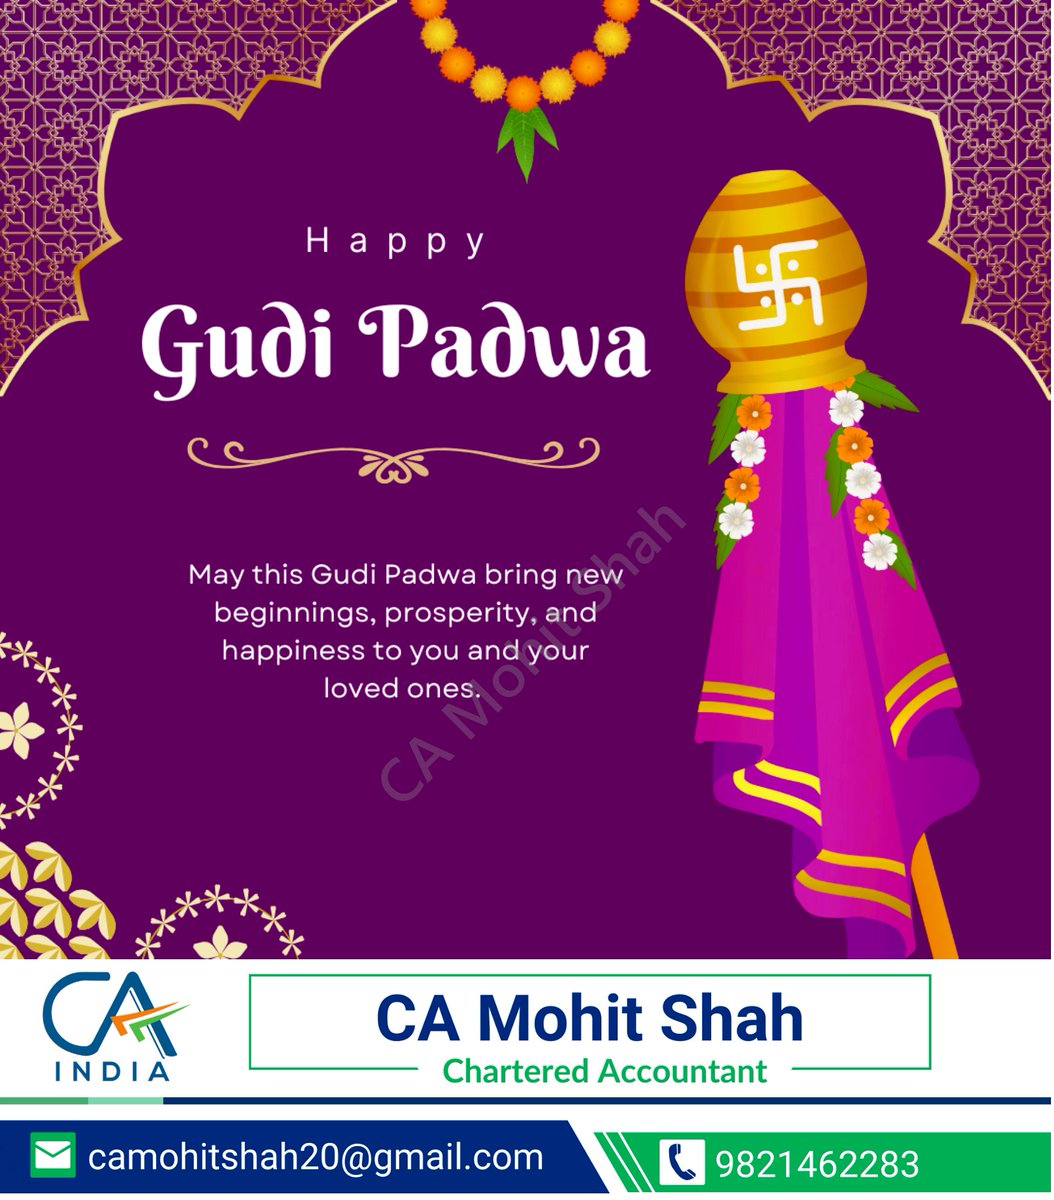 Happy Gudi Padwa to all! May this new year bring joy and prosperity.

#GudiPadwa #GudiPadwa2024 #MaharashtrianNewYear #MarathiNewYear #NewYearCelebration #GudiPadwaFestival #TraditionalCelebration #NewBeginnings #FestiveVibes #GudiPadwaGreetings